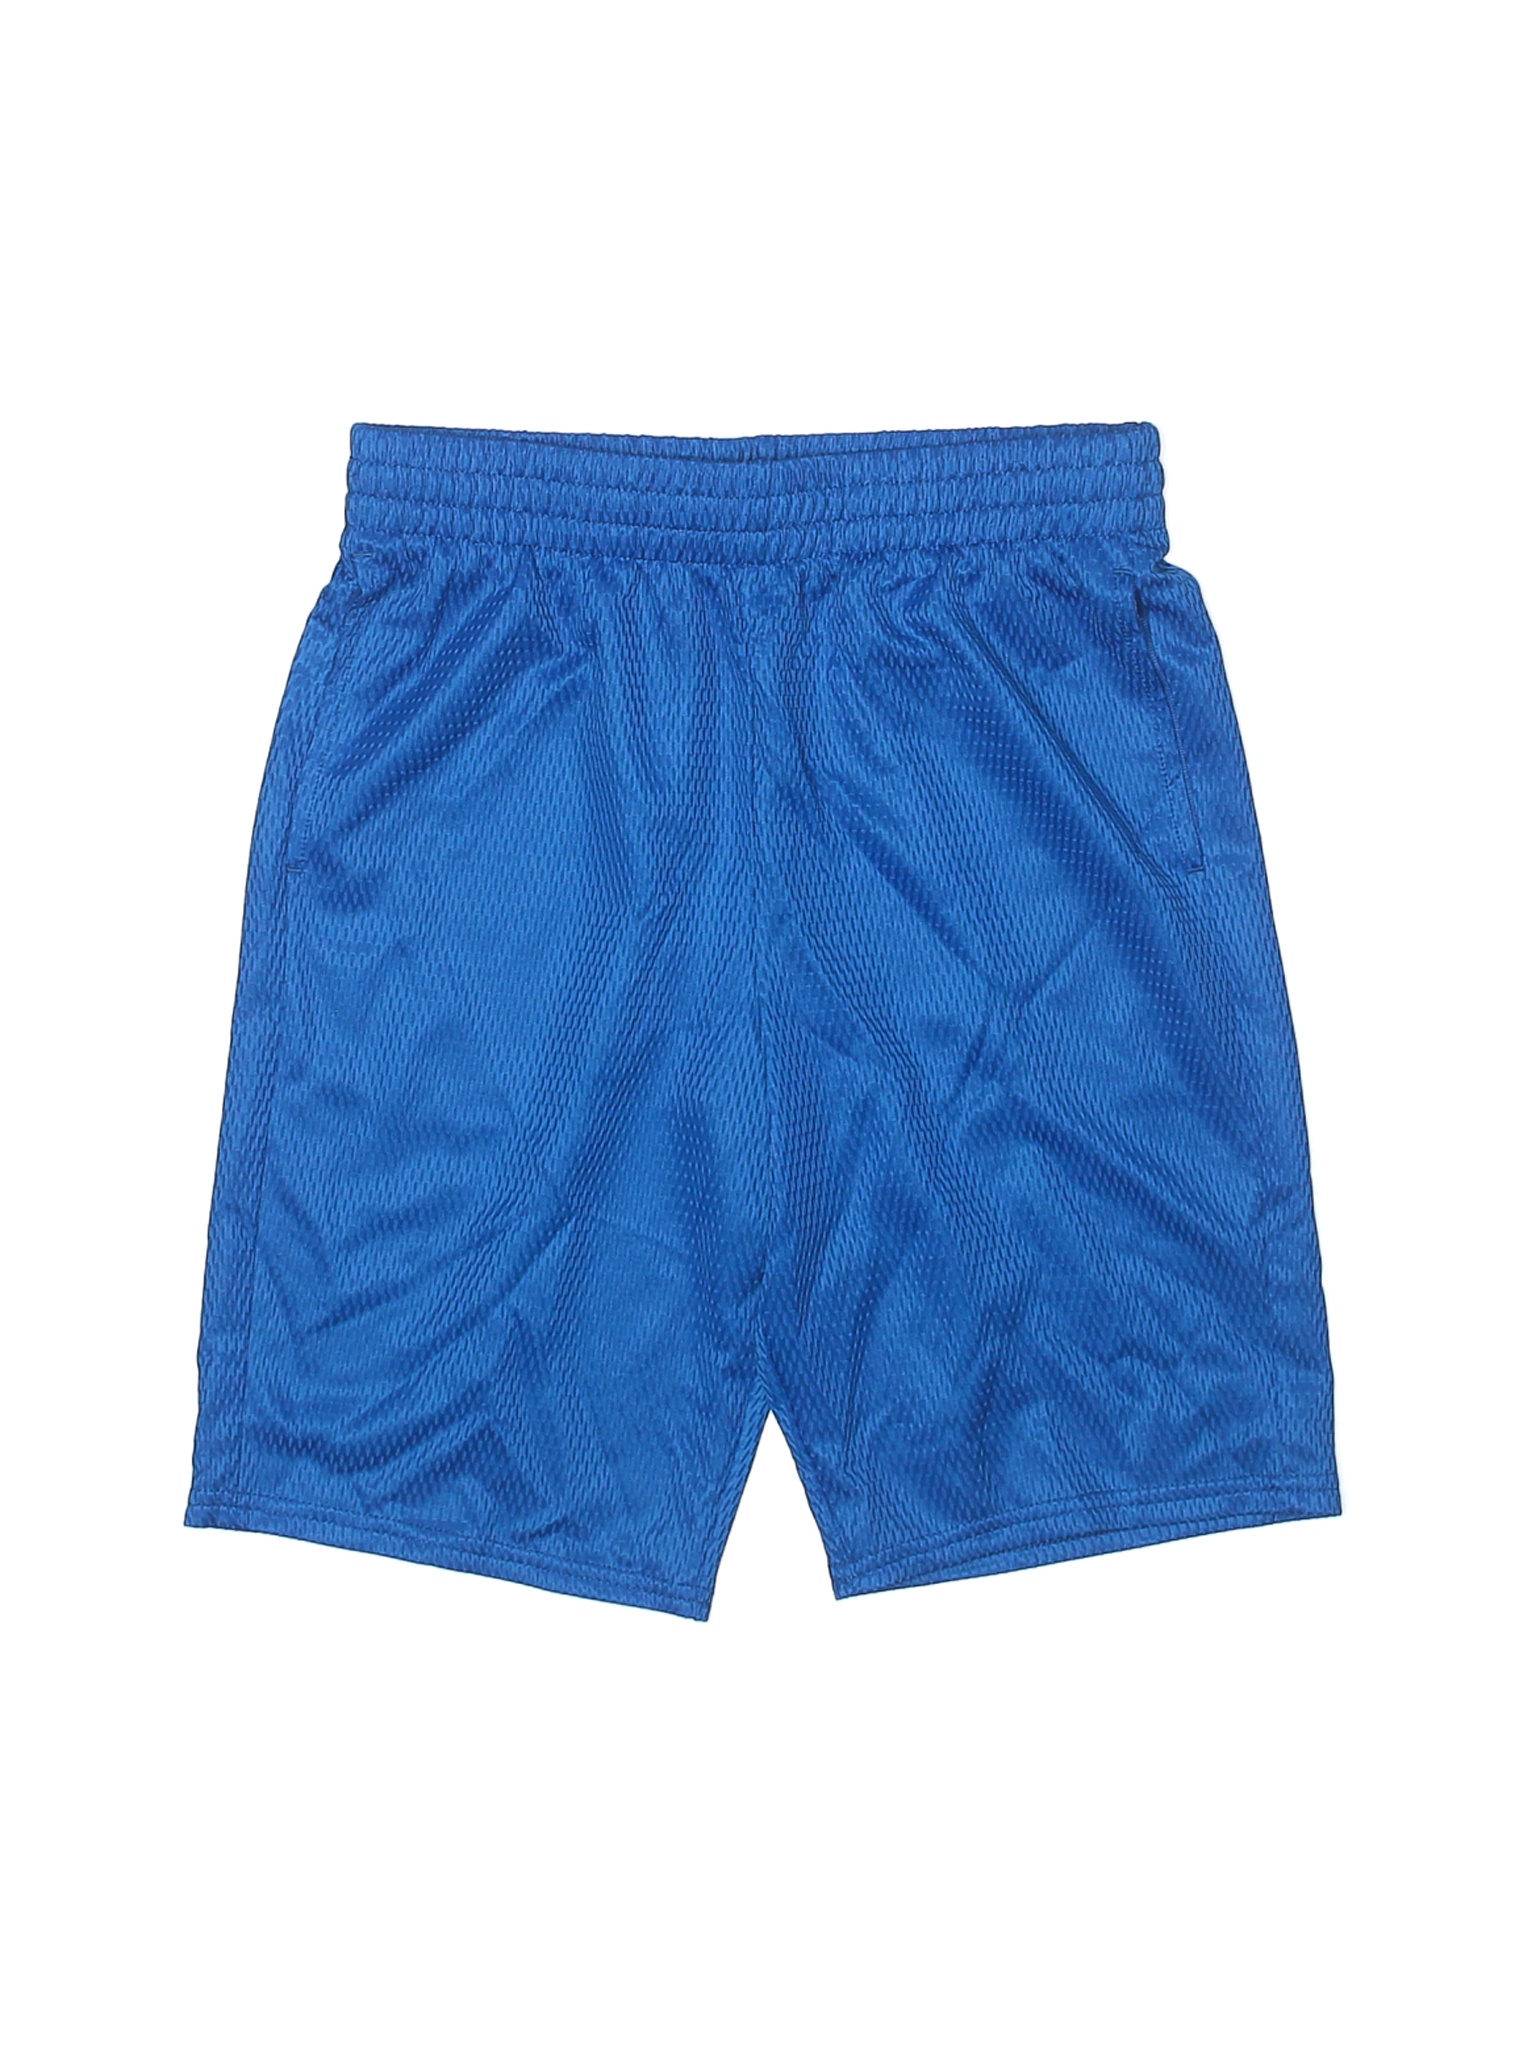 Athletic Works Boys Blue Athletic Shorts 10 | eBay